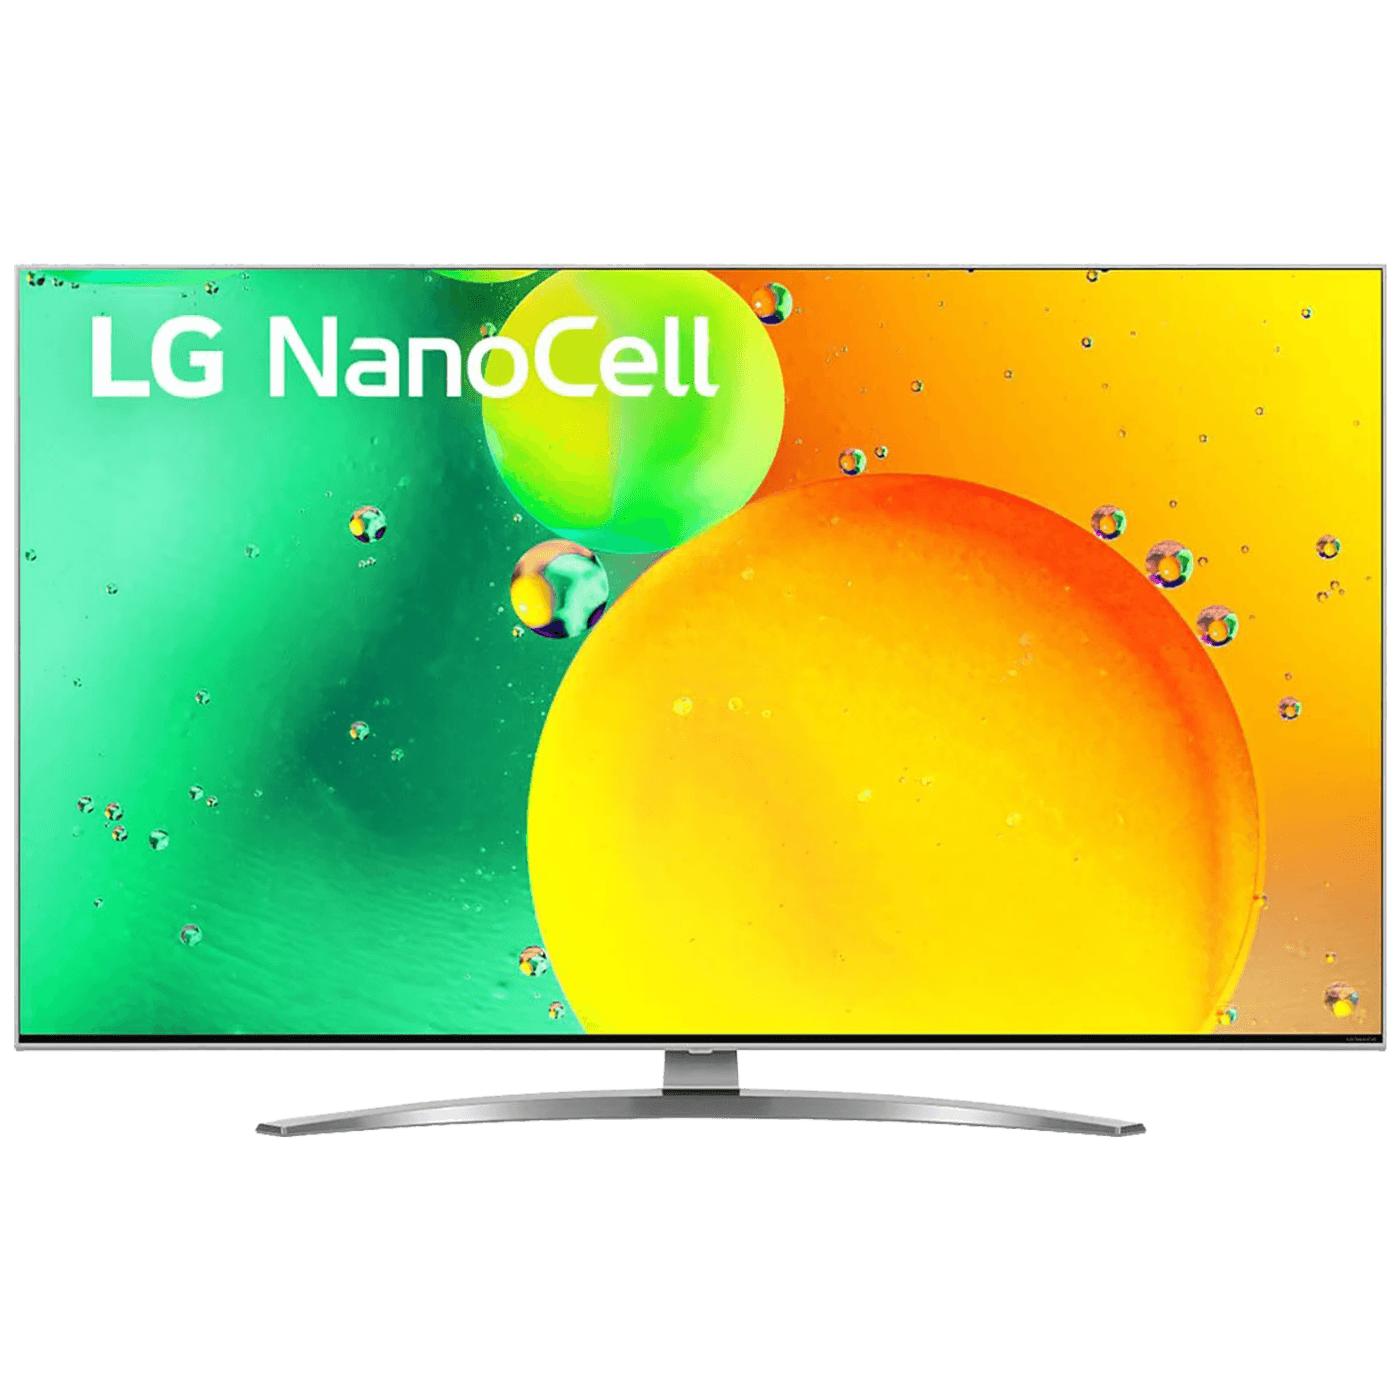 LG TV - Smart Nano Cell 4K LED TV 55